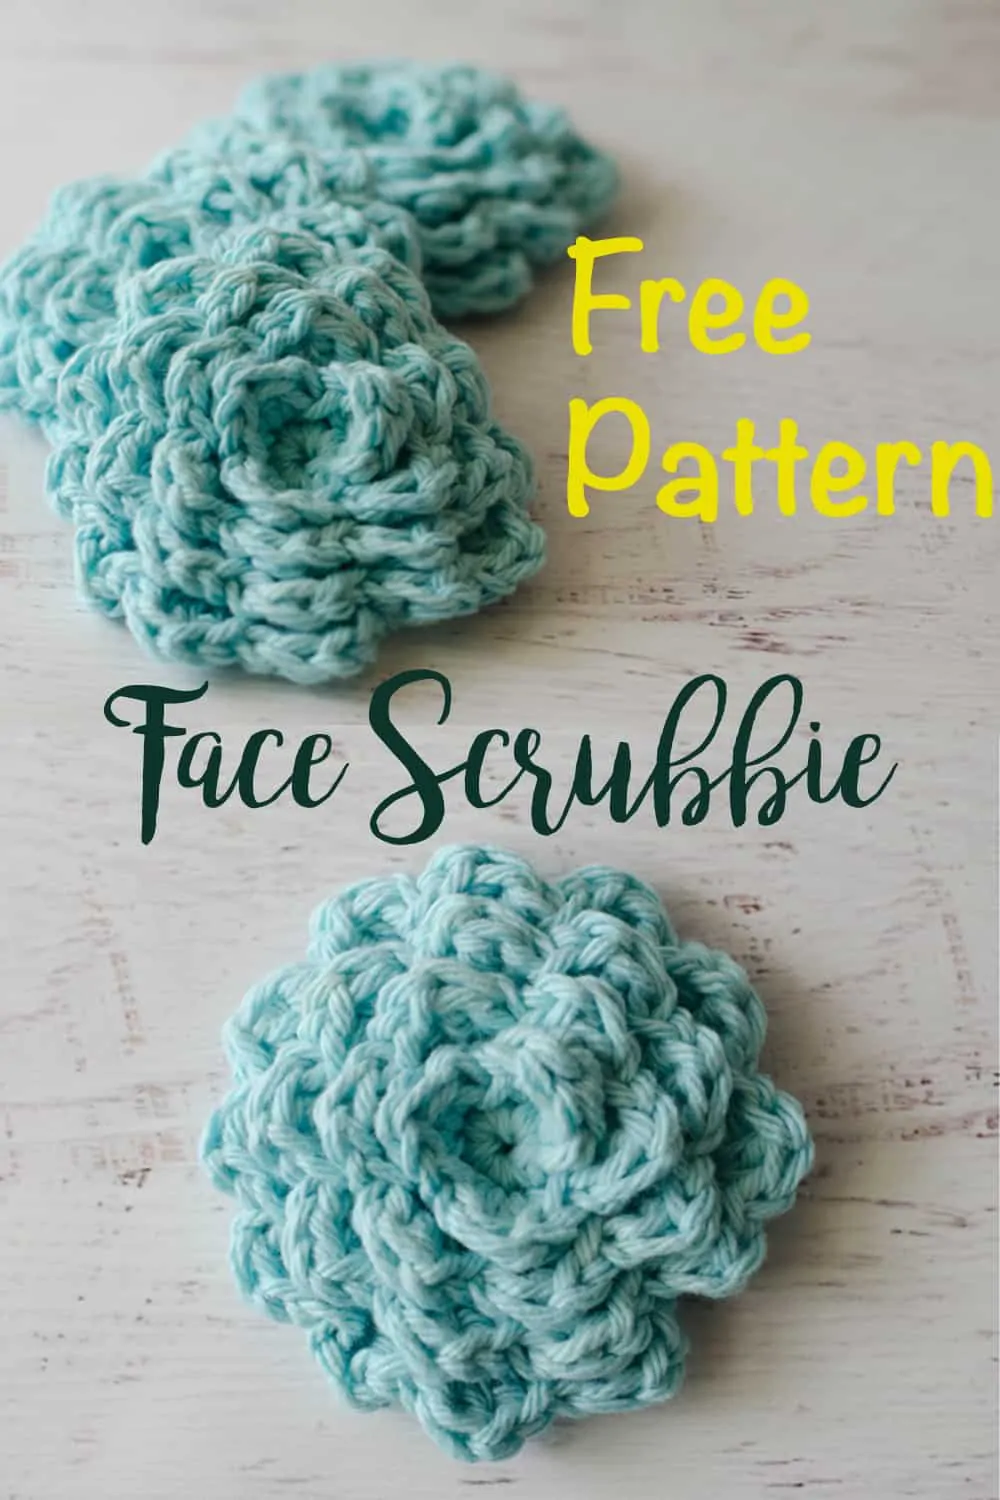 Free pattern for crochet face scrubbies